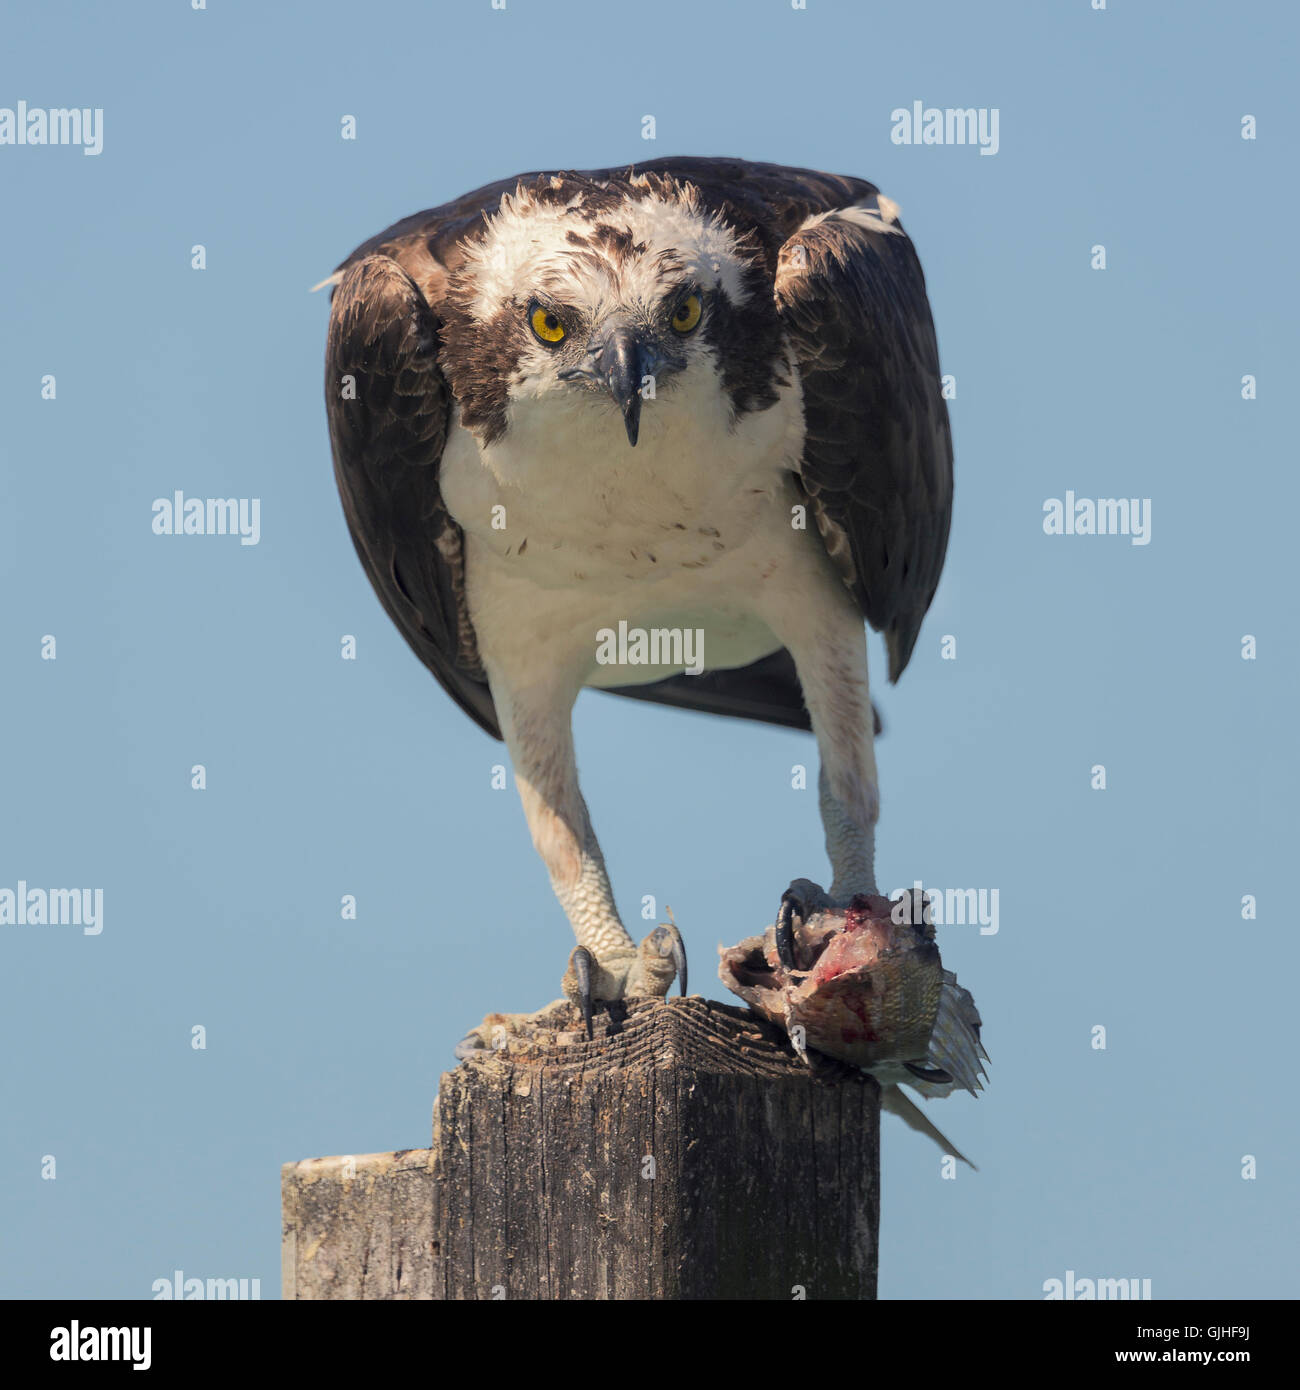 Osprey (Pandion haliaetus) standing on wooden post eating fish, Sarasota, Florida, United States Stock Photo